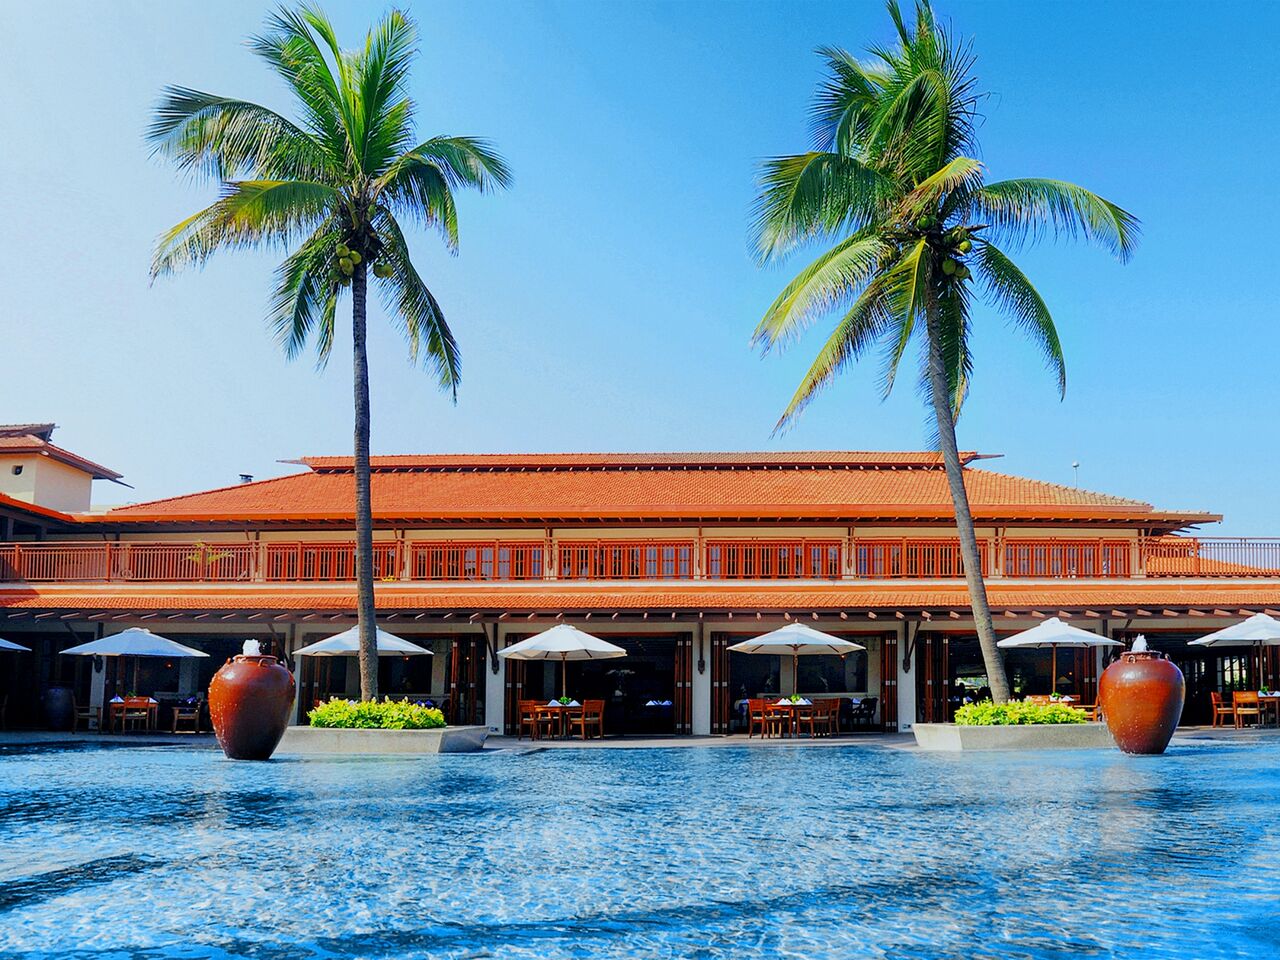 furama resort danang named winner at 2017 world luxury hotel awards